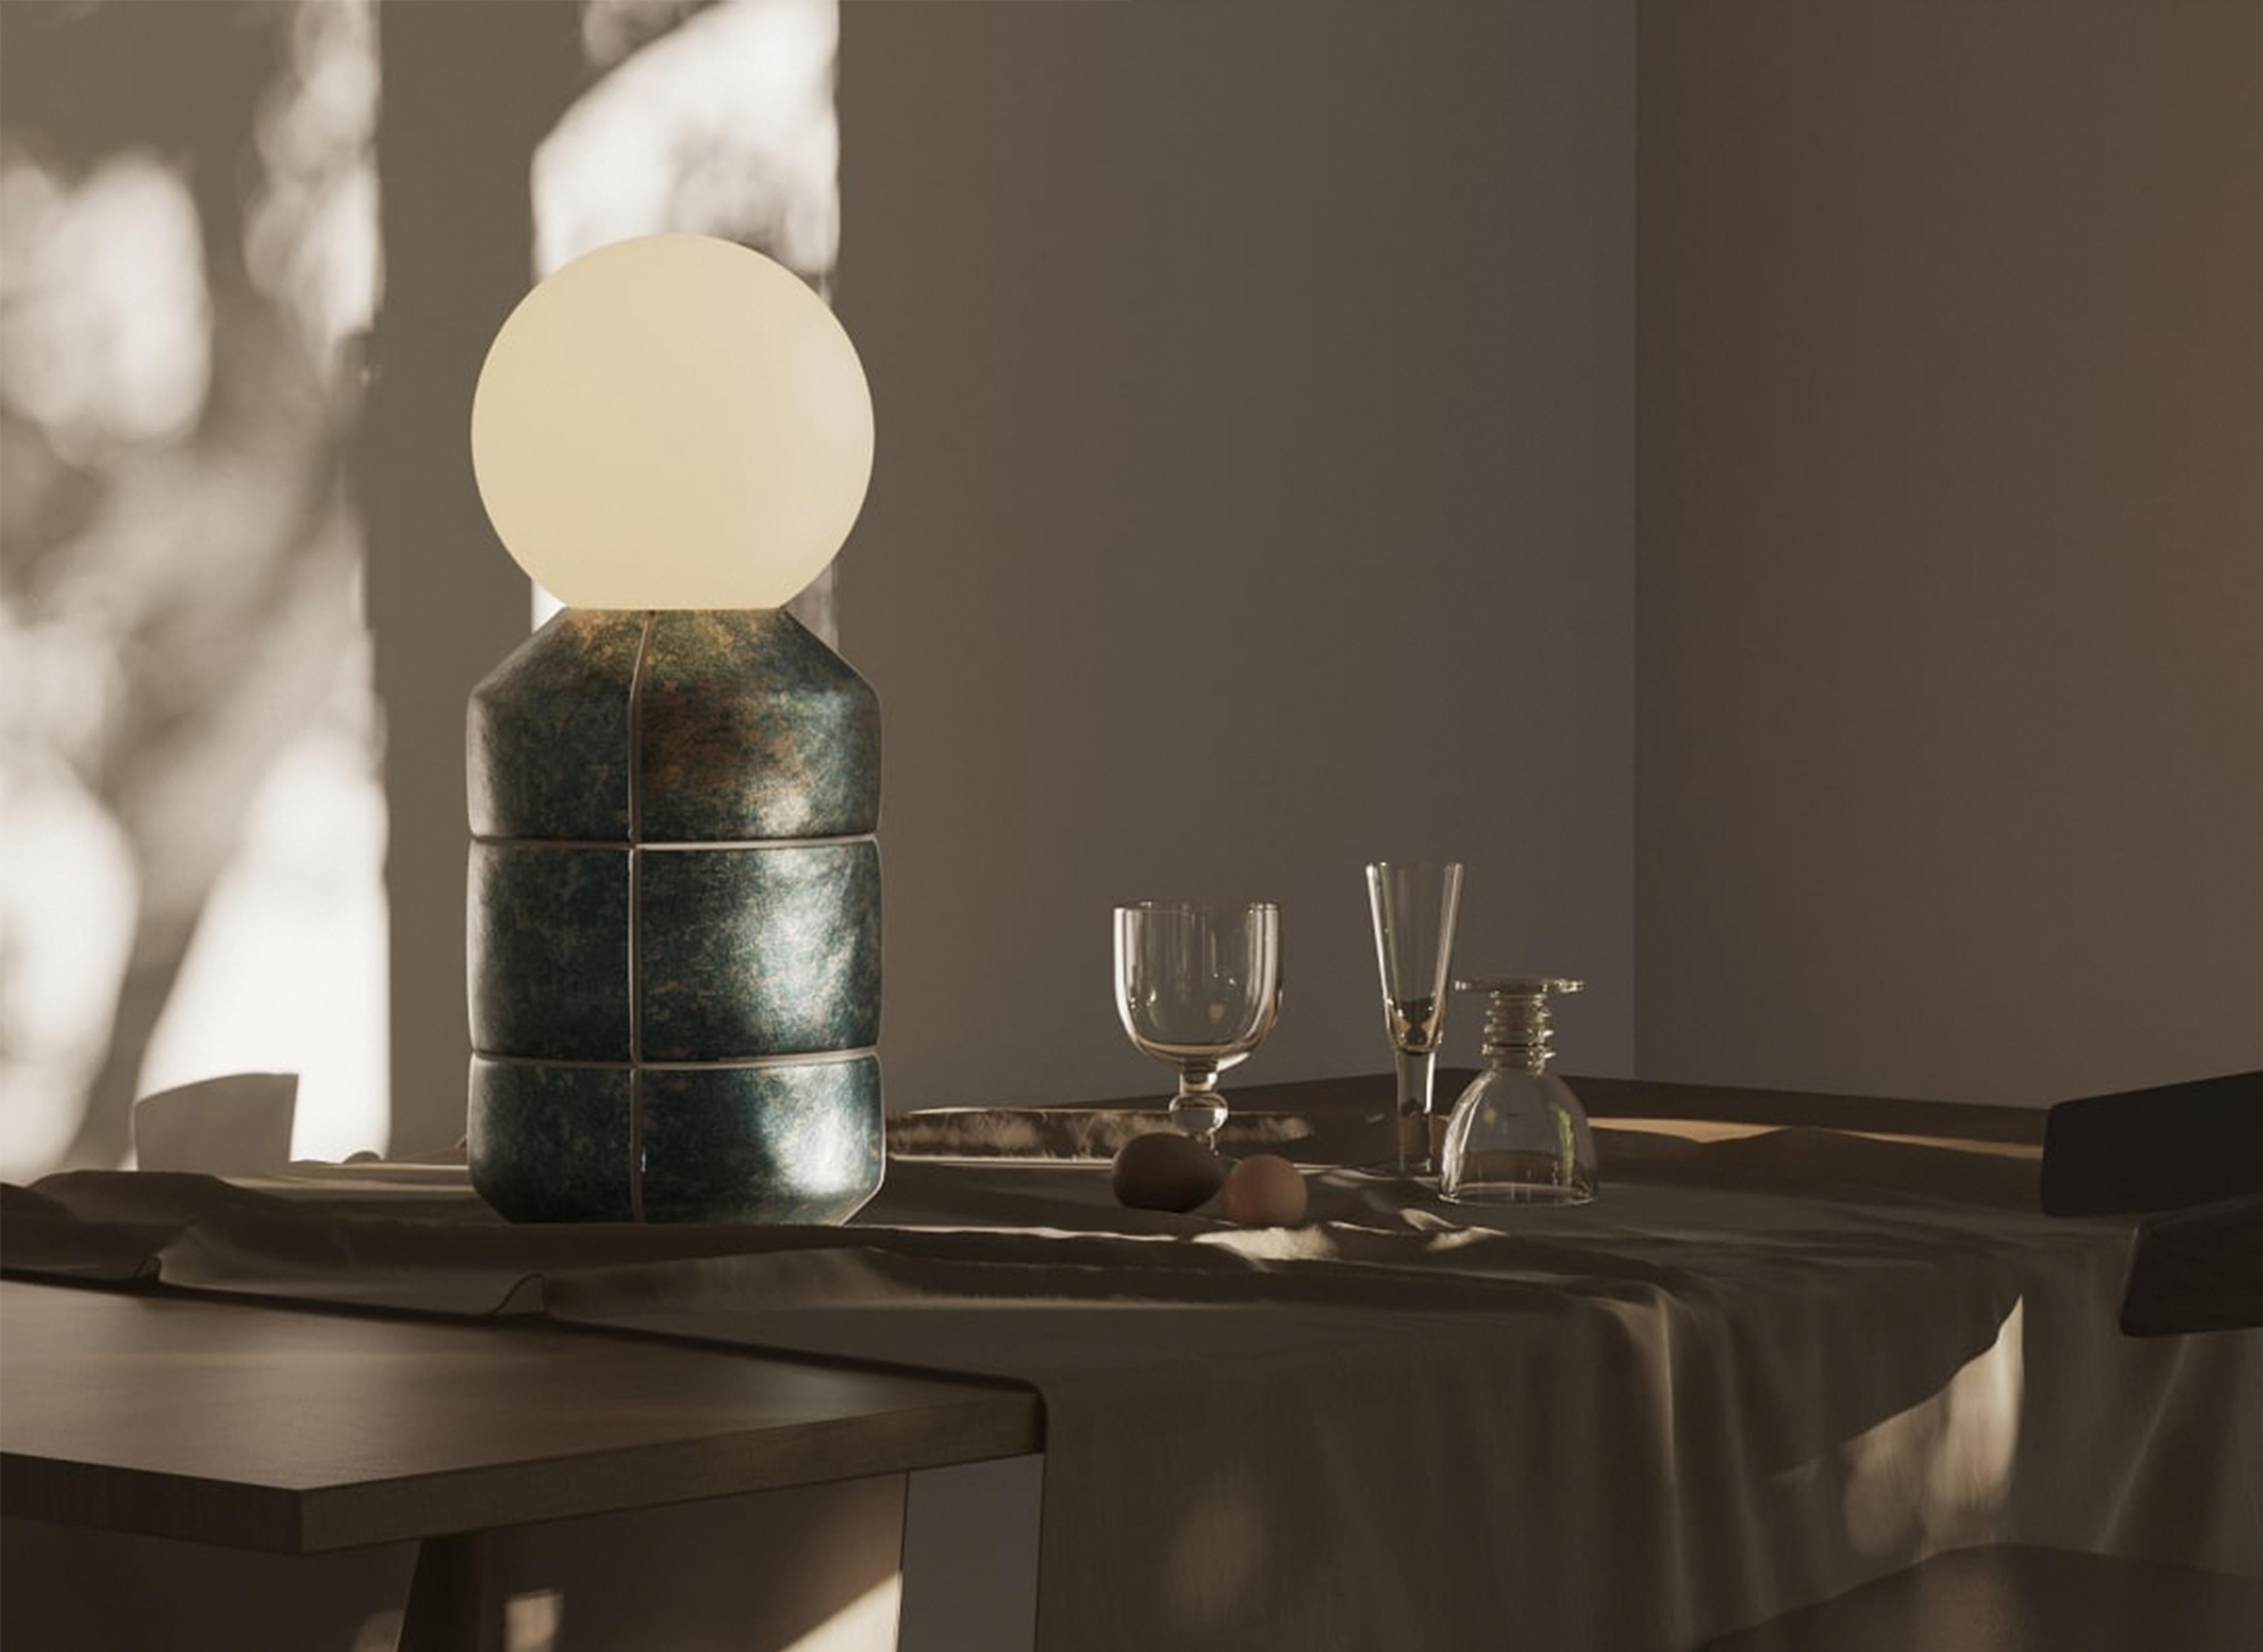 Glazed Handmade Handcrafted Ceramic Pottery Table Lamp Artisanal Illumination Lighting For Sale